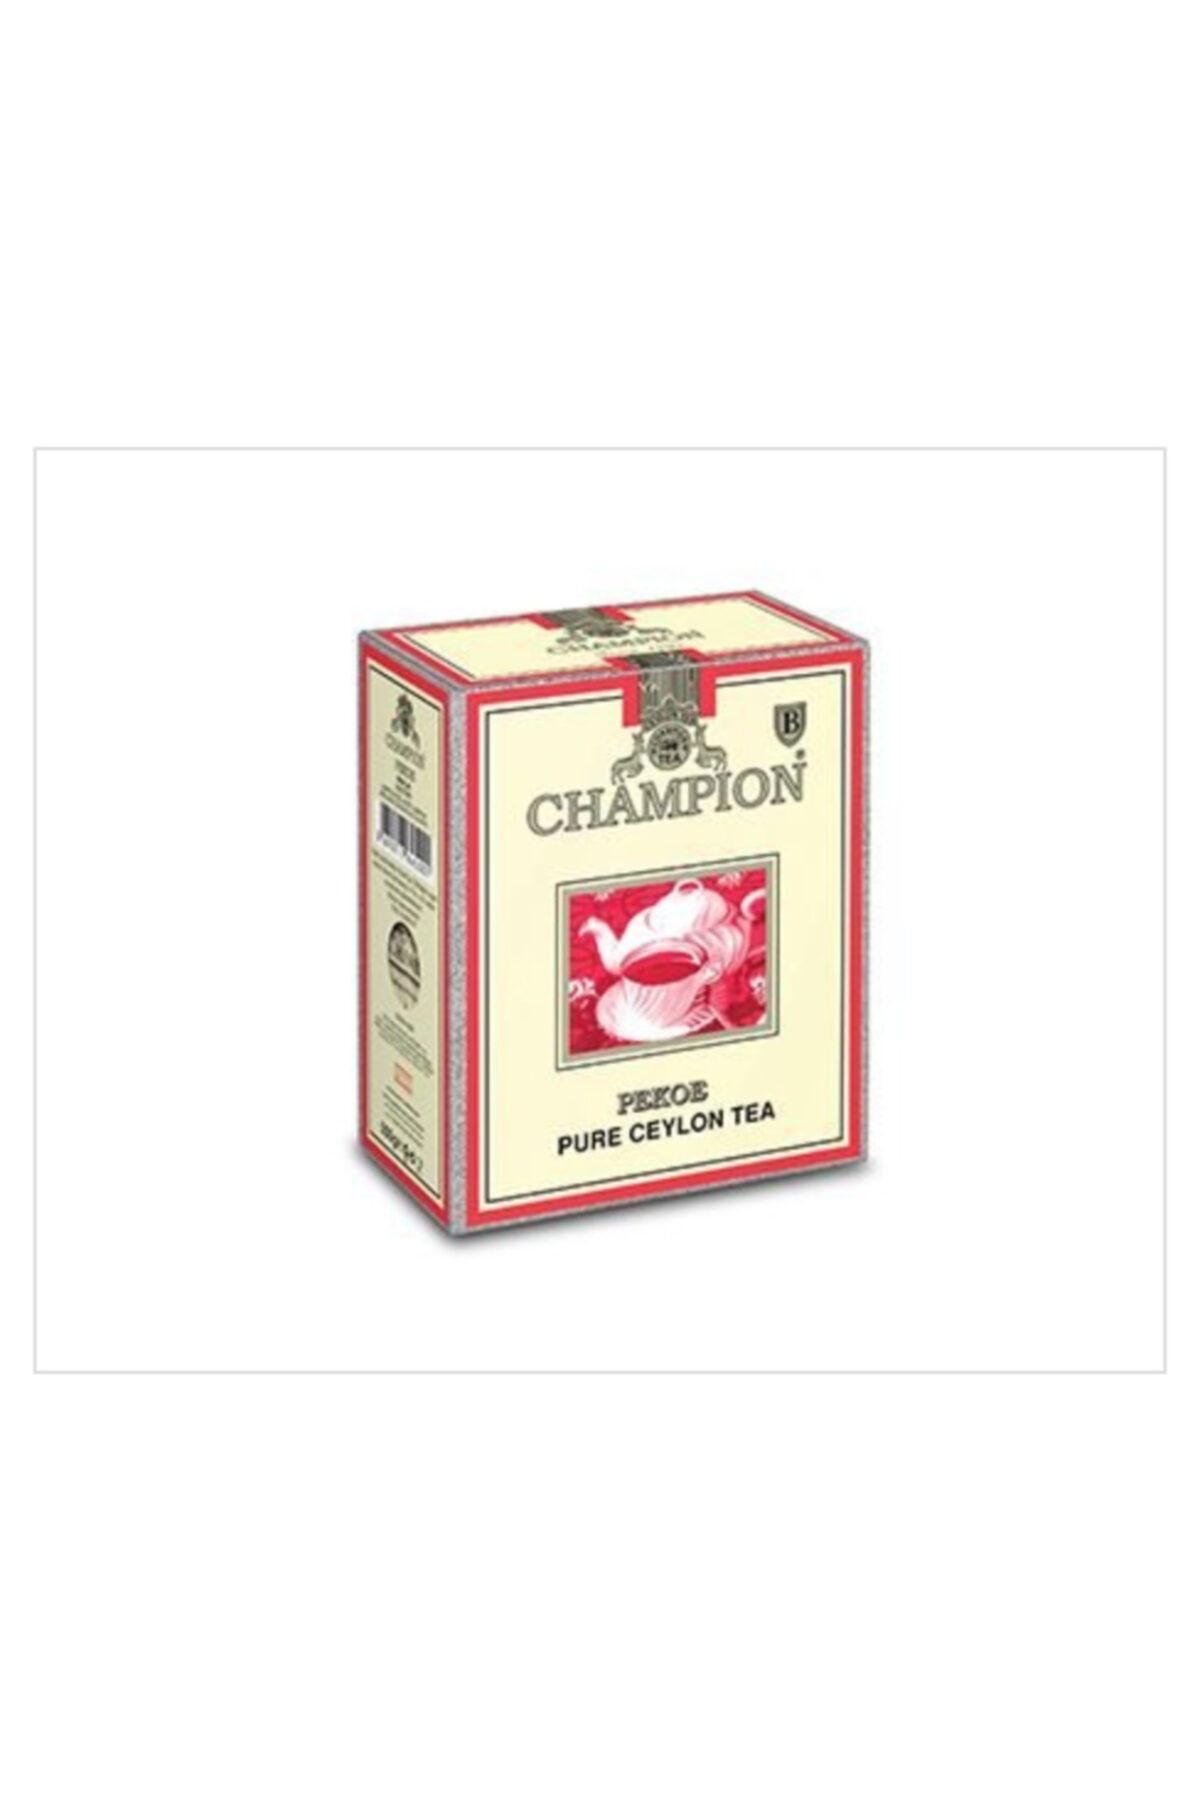 Champion Çay Super Pekoe Seylan Çayı 500 gr